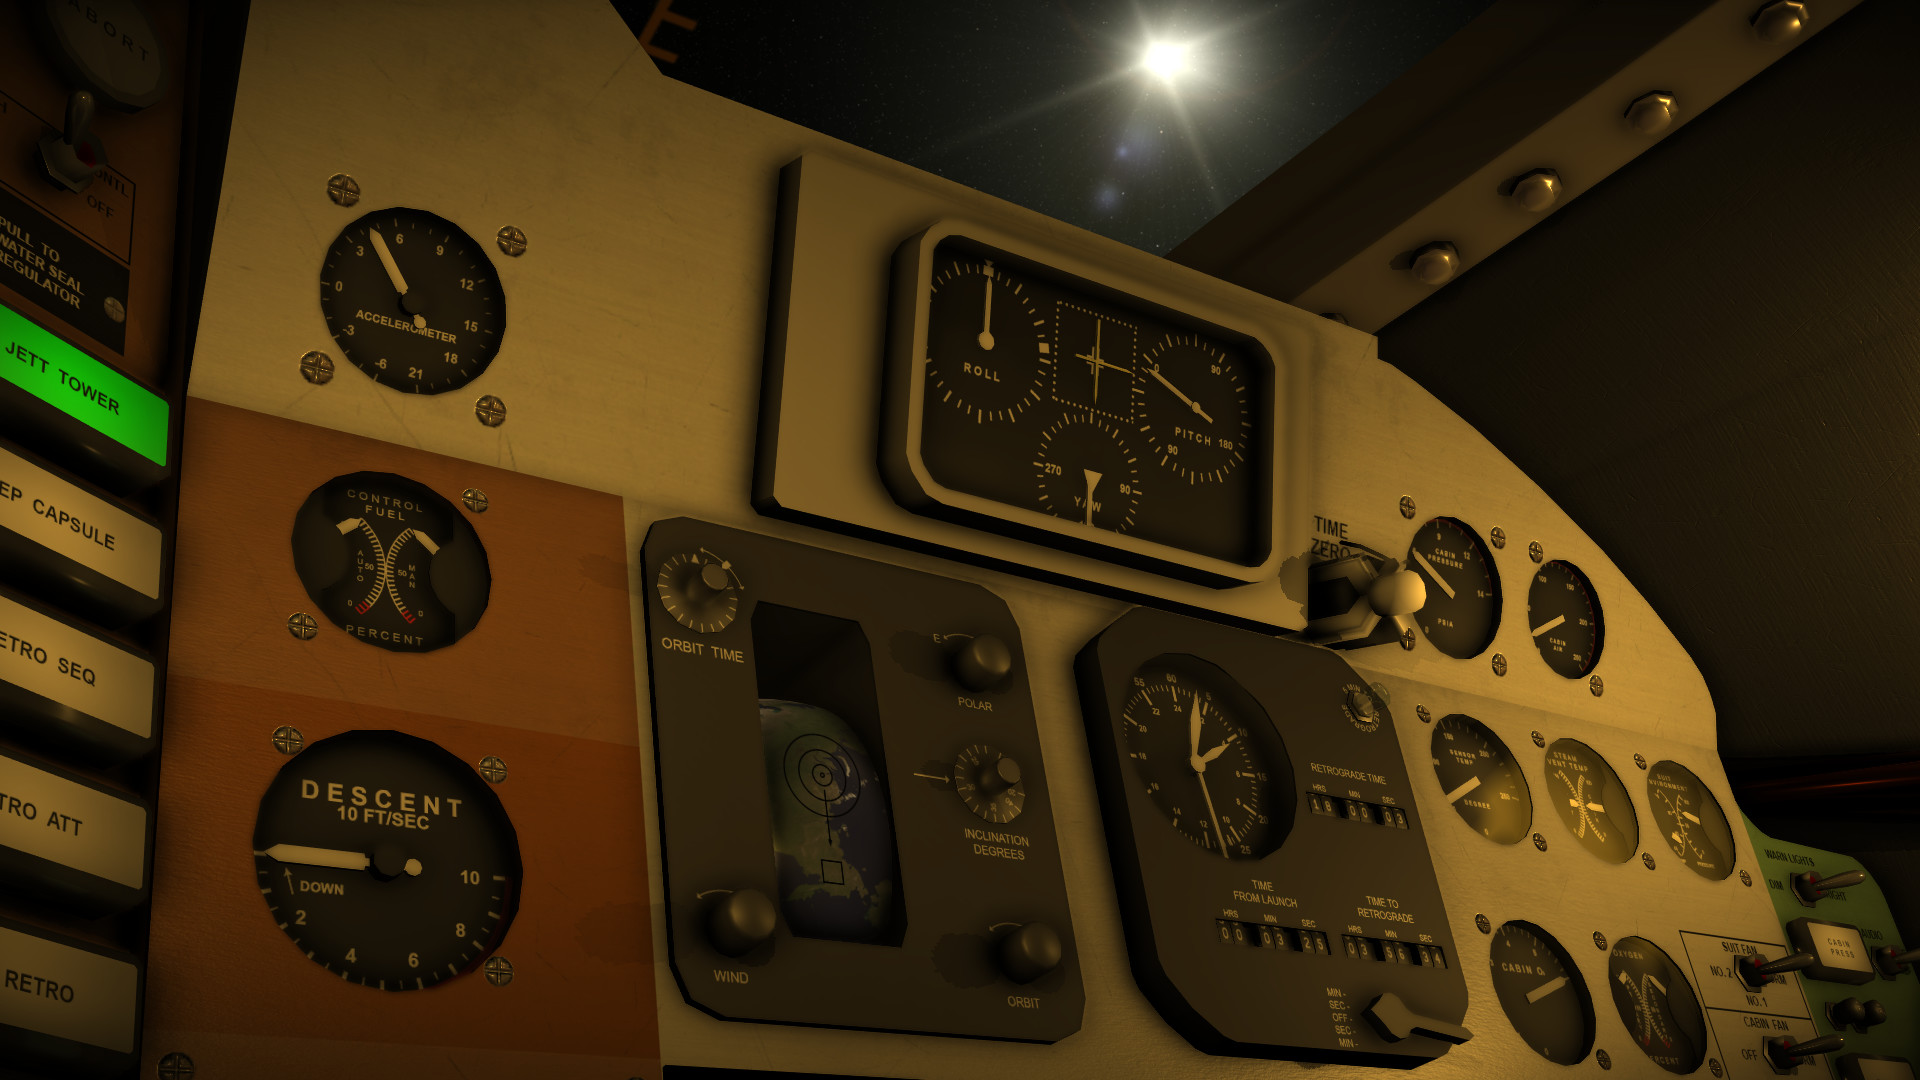 Reentry - An Orbital Simulator Free Download